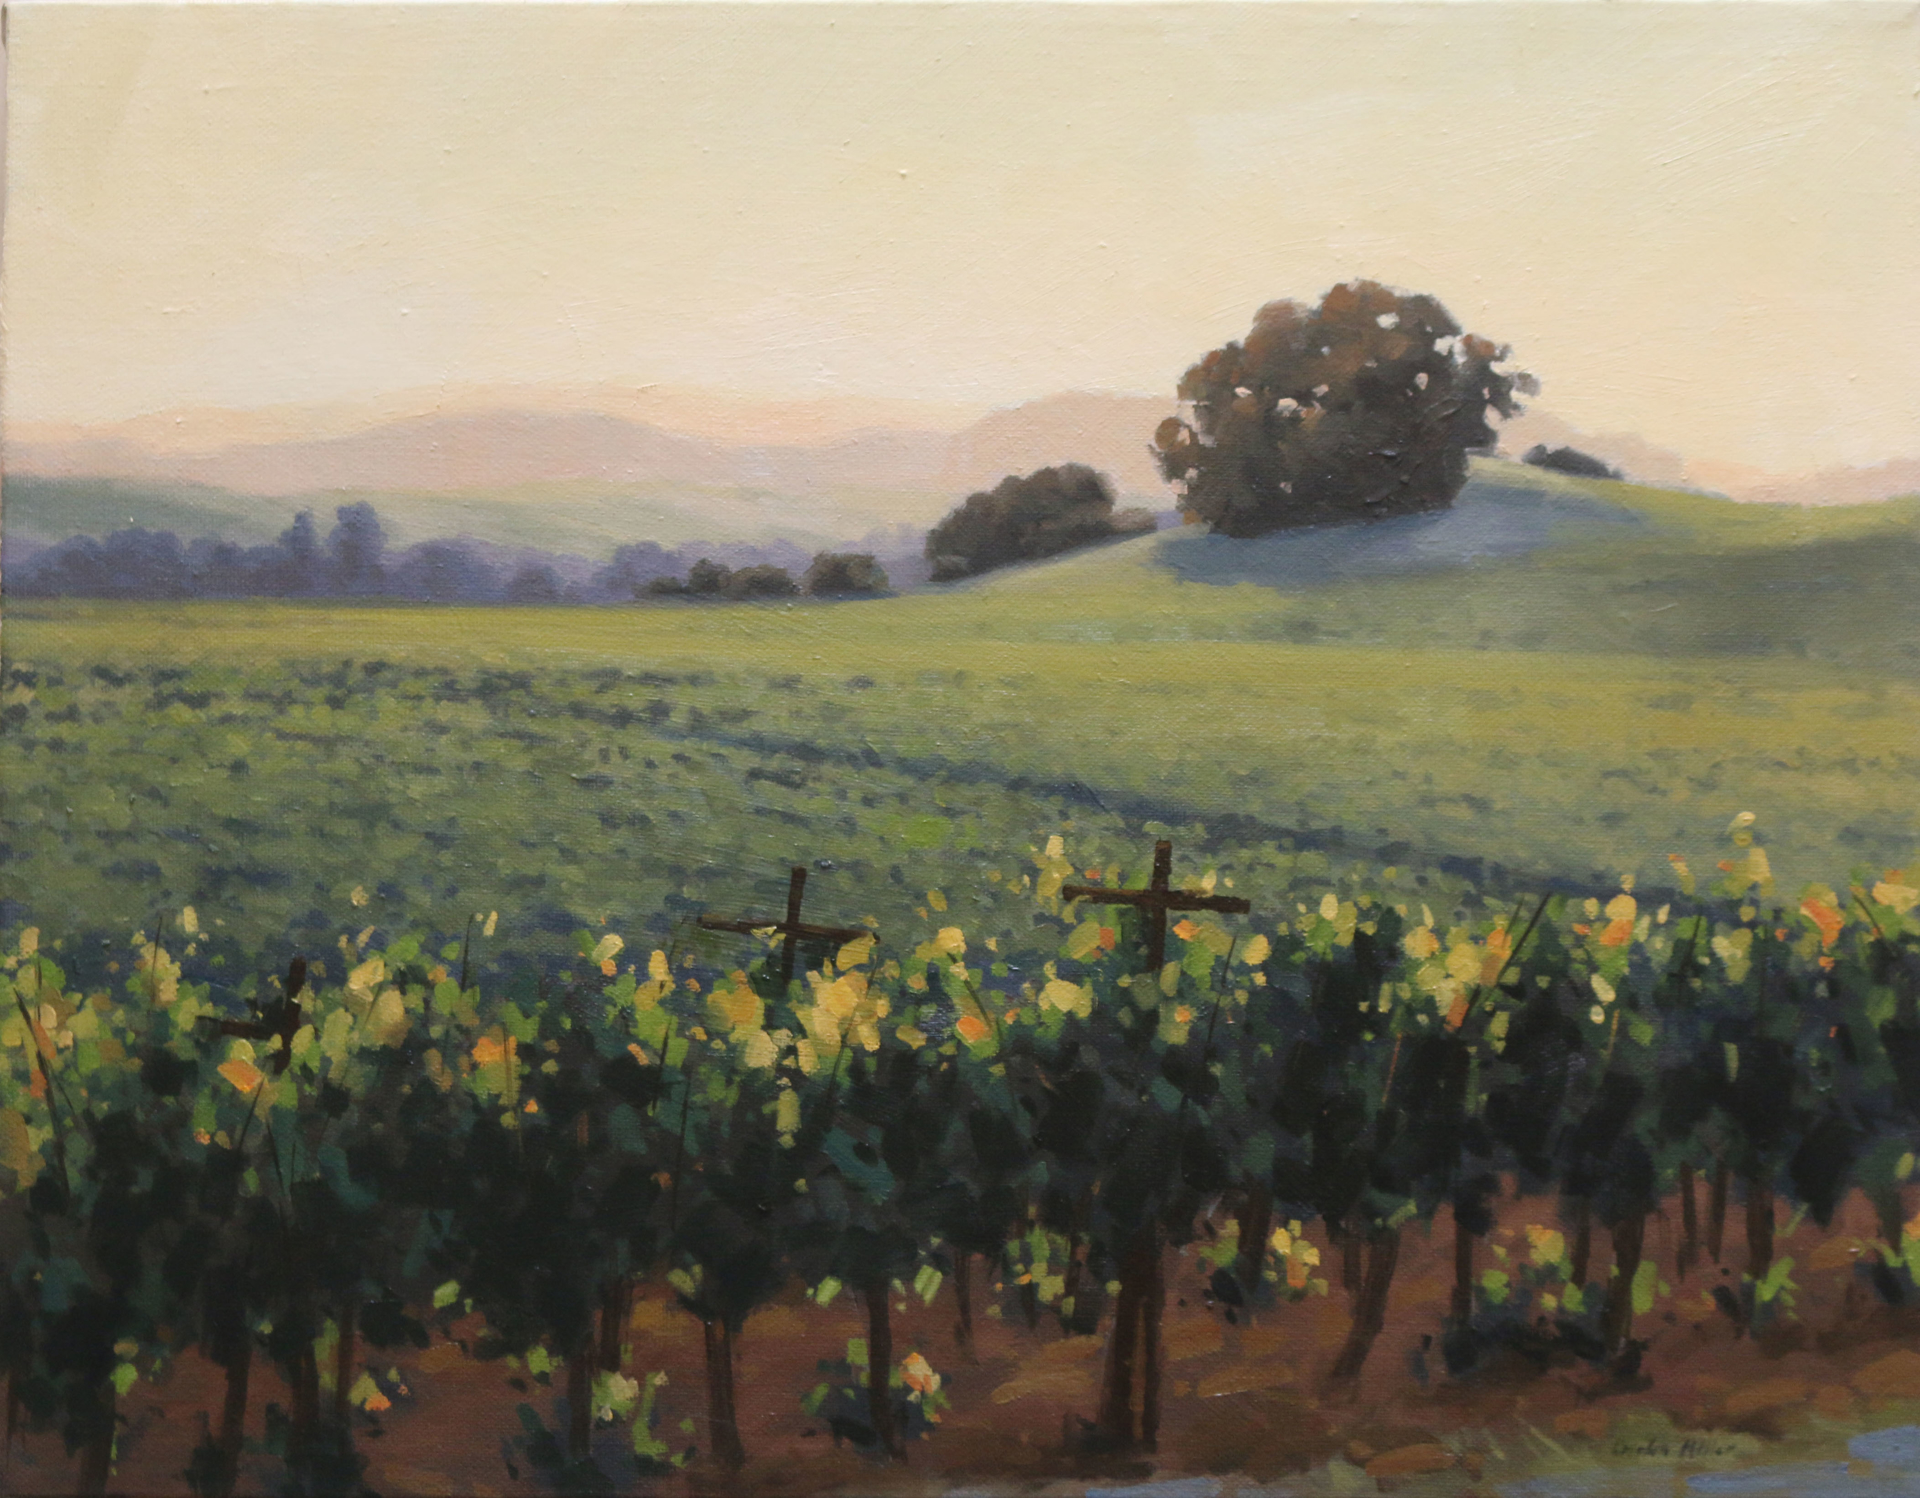 Evening Light in the Vineyard by Cristen Miller